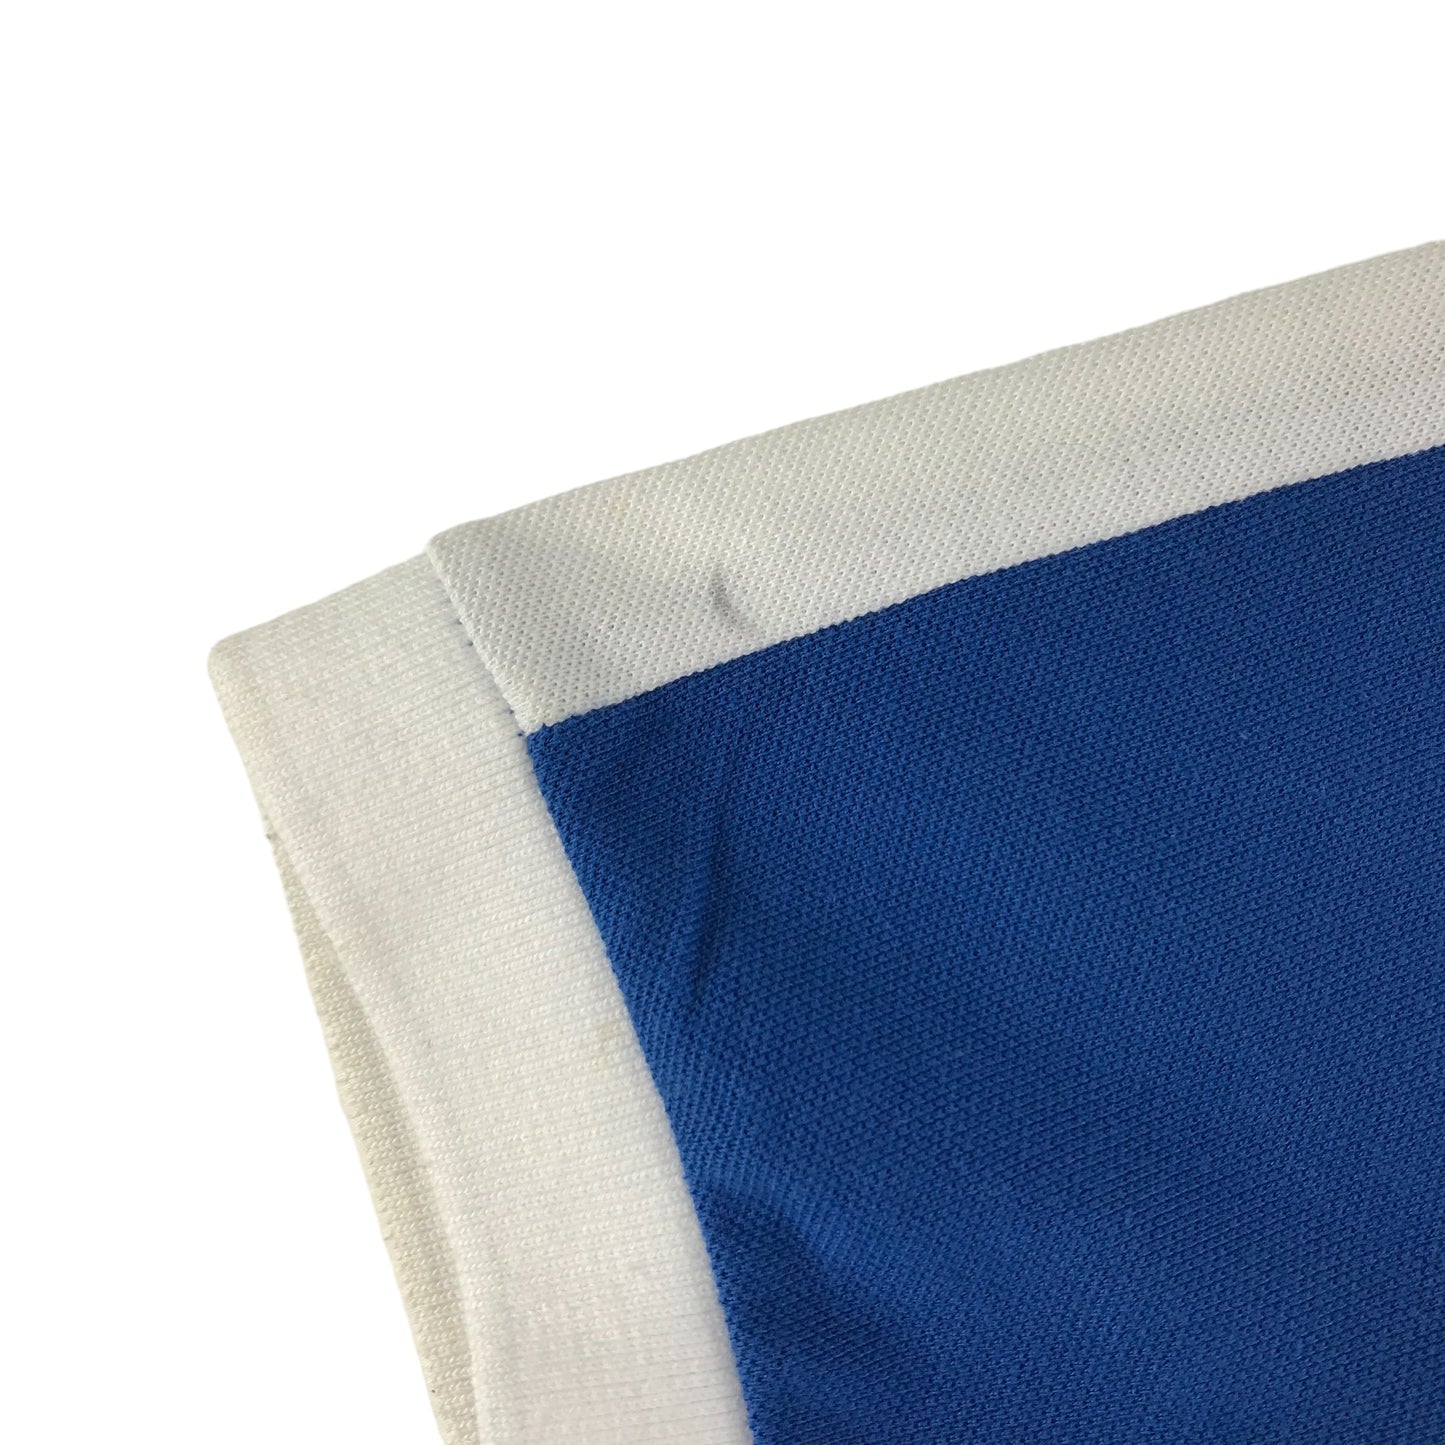 UEFA Official Euro 2020 Italia Polo Shirt Age 9 Blue with White Collars